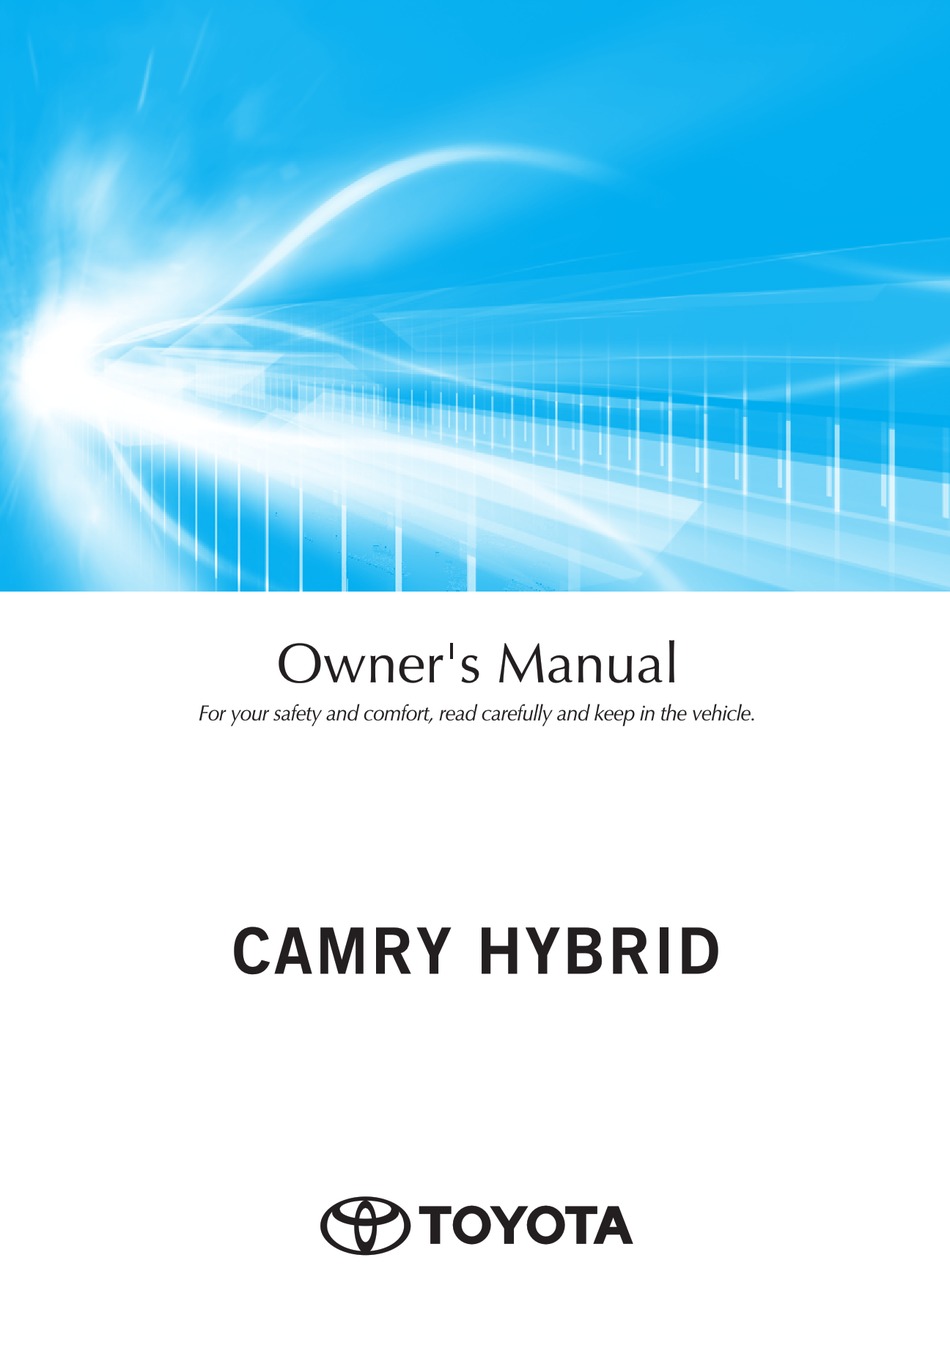 TOYOTA CAMRY HYBRID OWNER'S MANUAL Pdf Download ManualsLib